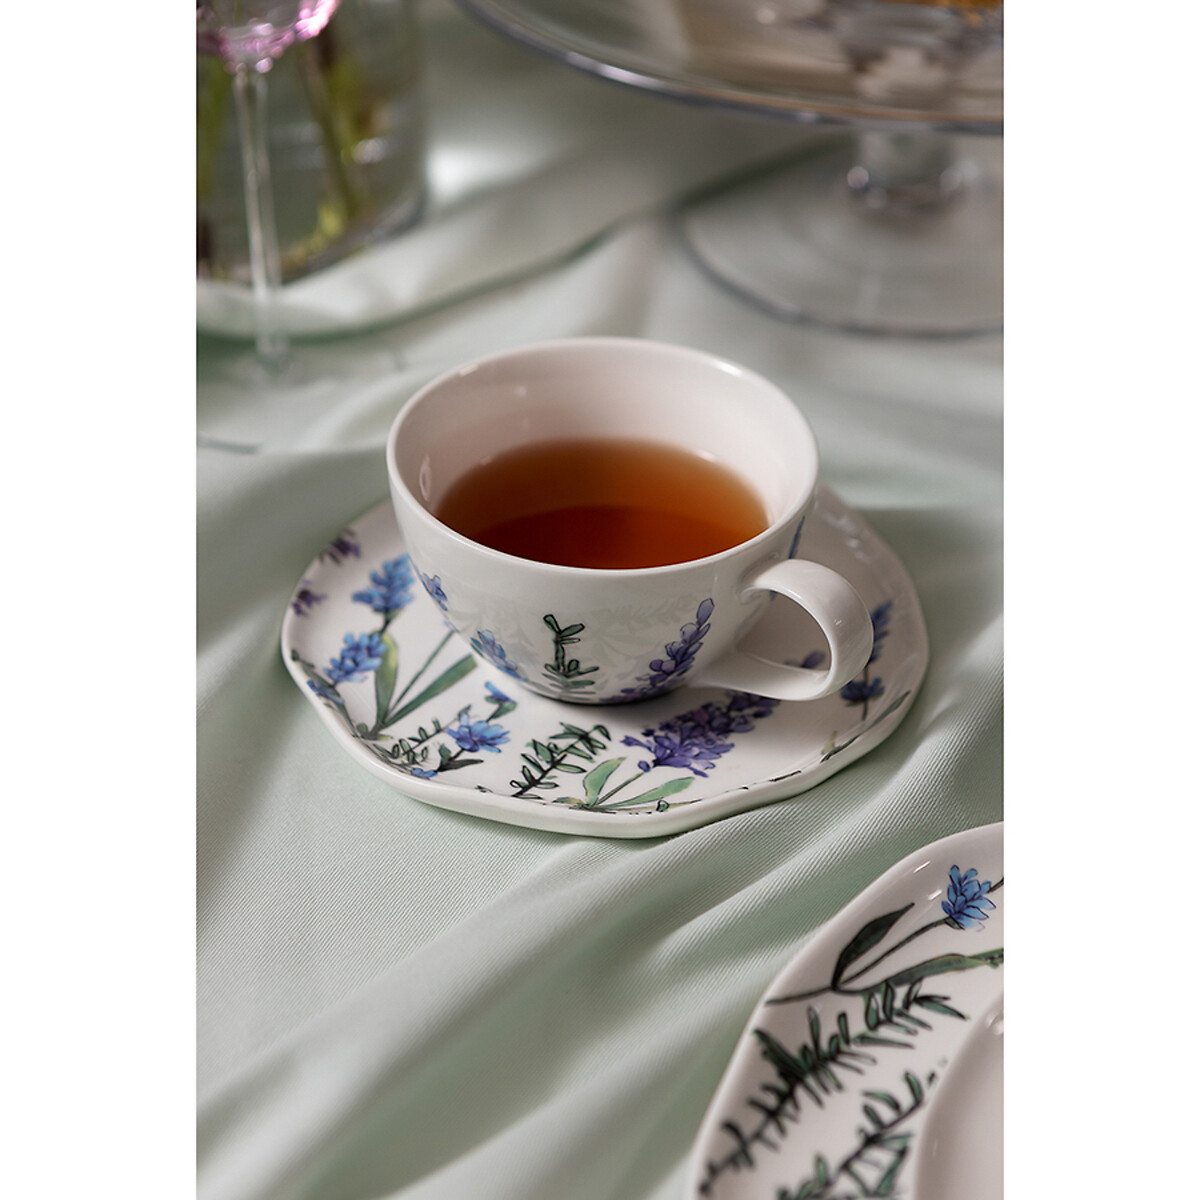 A cup of liber tea. Fioretta чайная пара Floral Lace 180 мл. Liberty Jones чайная пара. Чайные пары Либерти Джонс. Liberty Jones посуда.